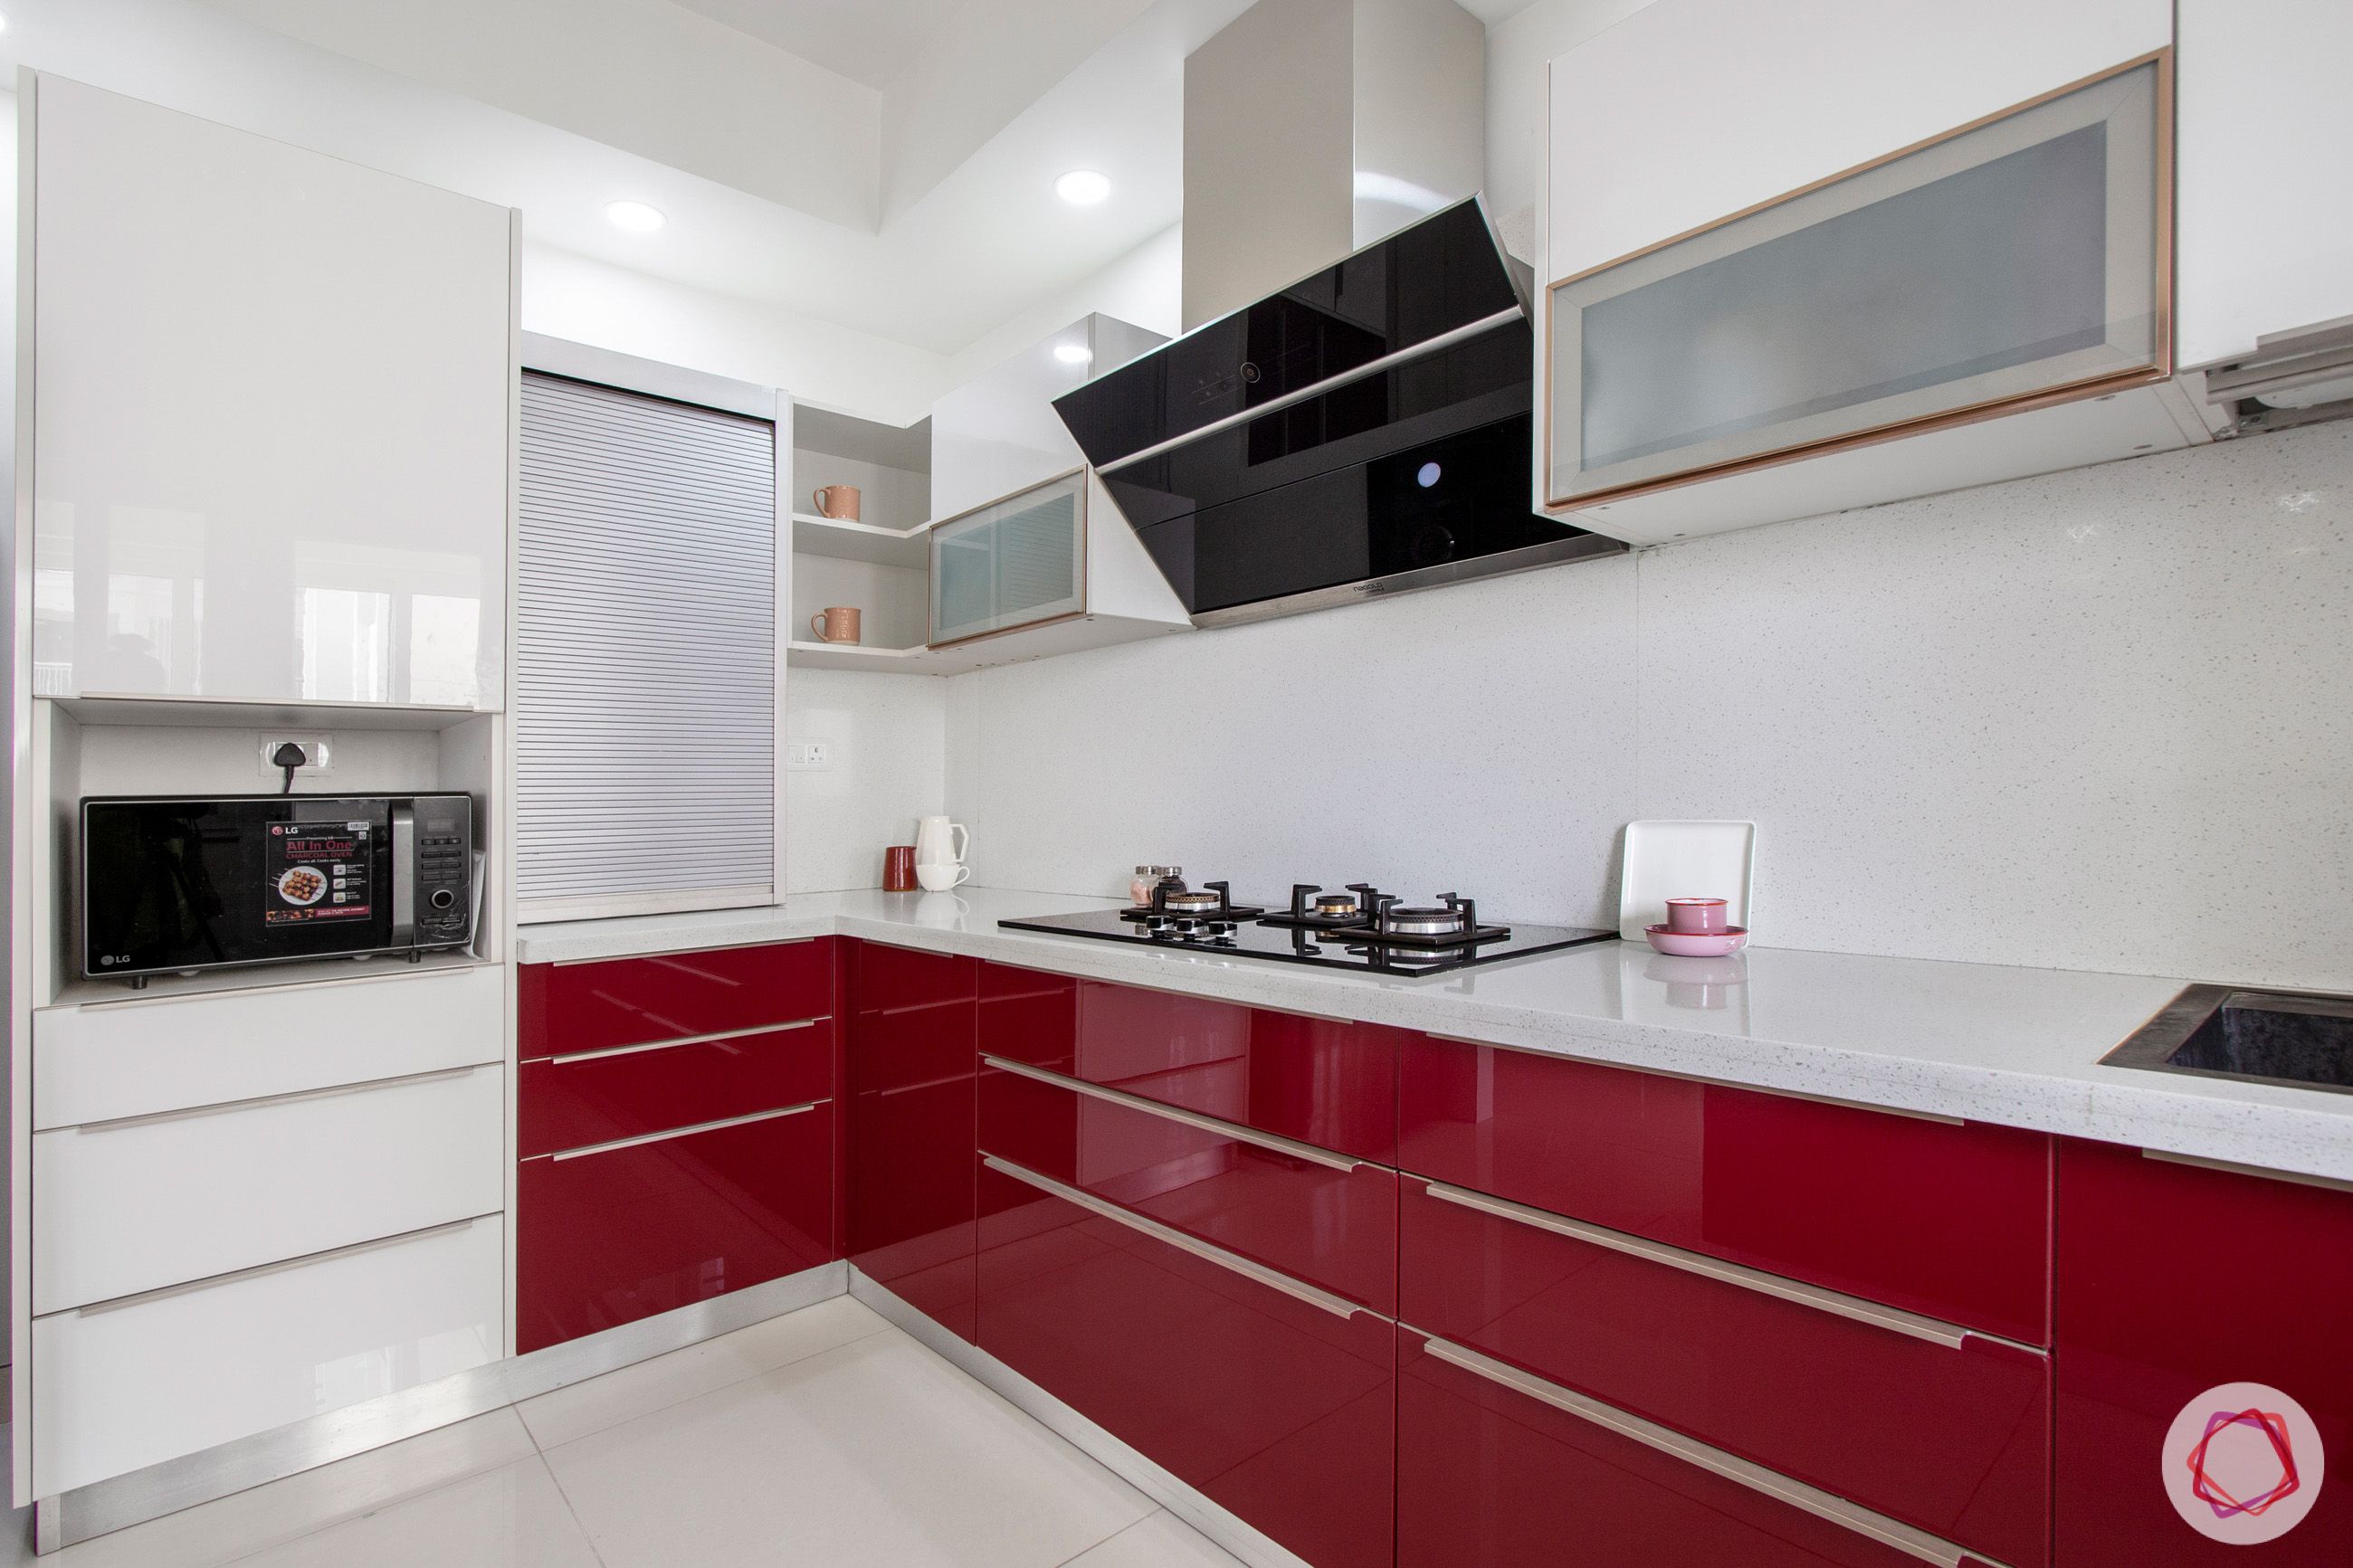 snn-raj-grandeur-kitchen-corner unit-red cabinets